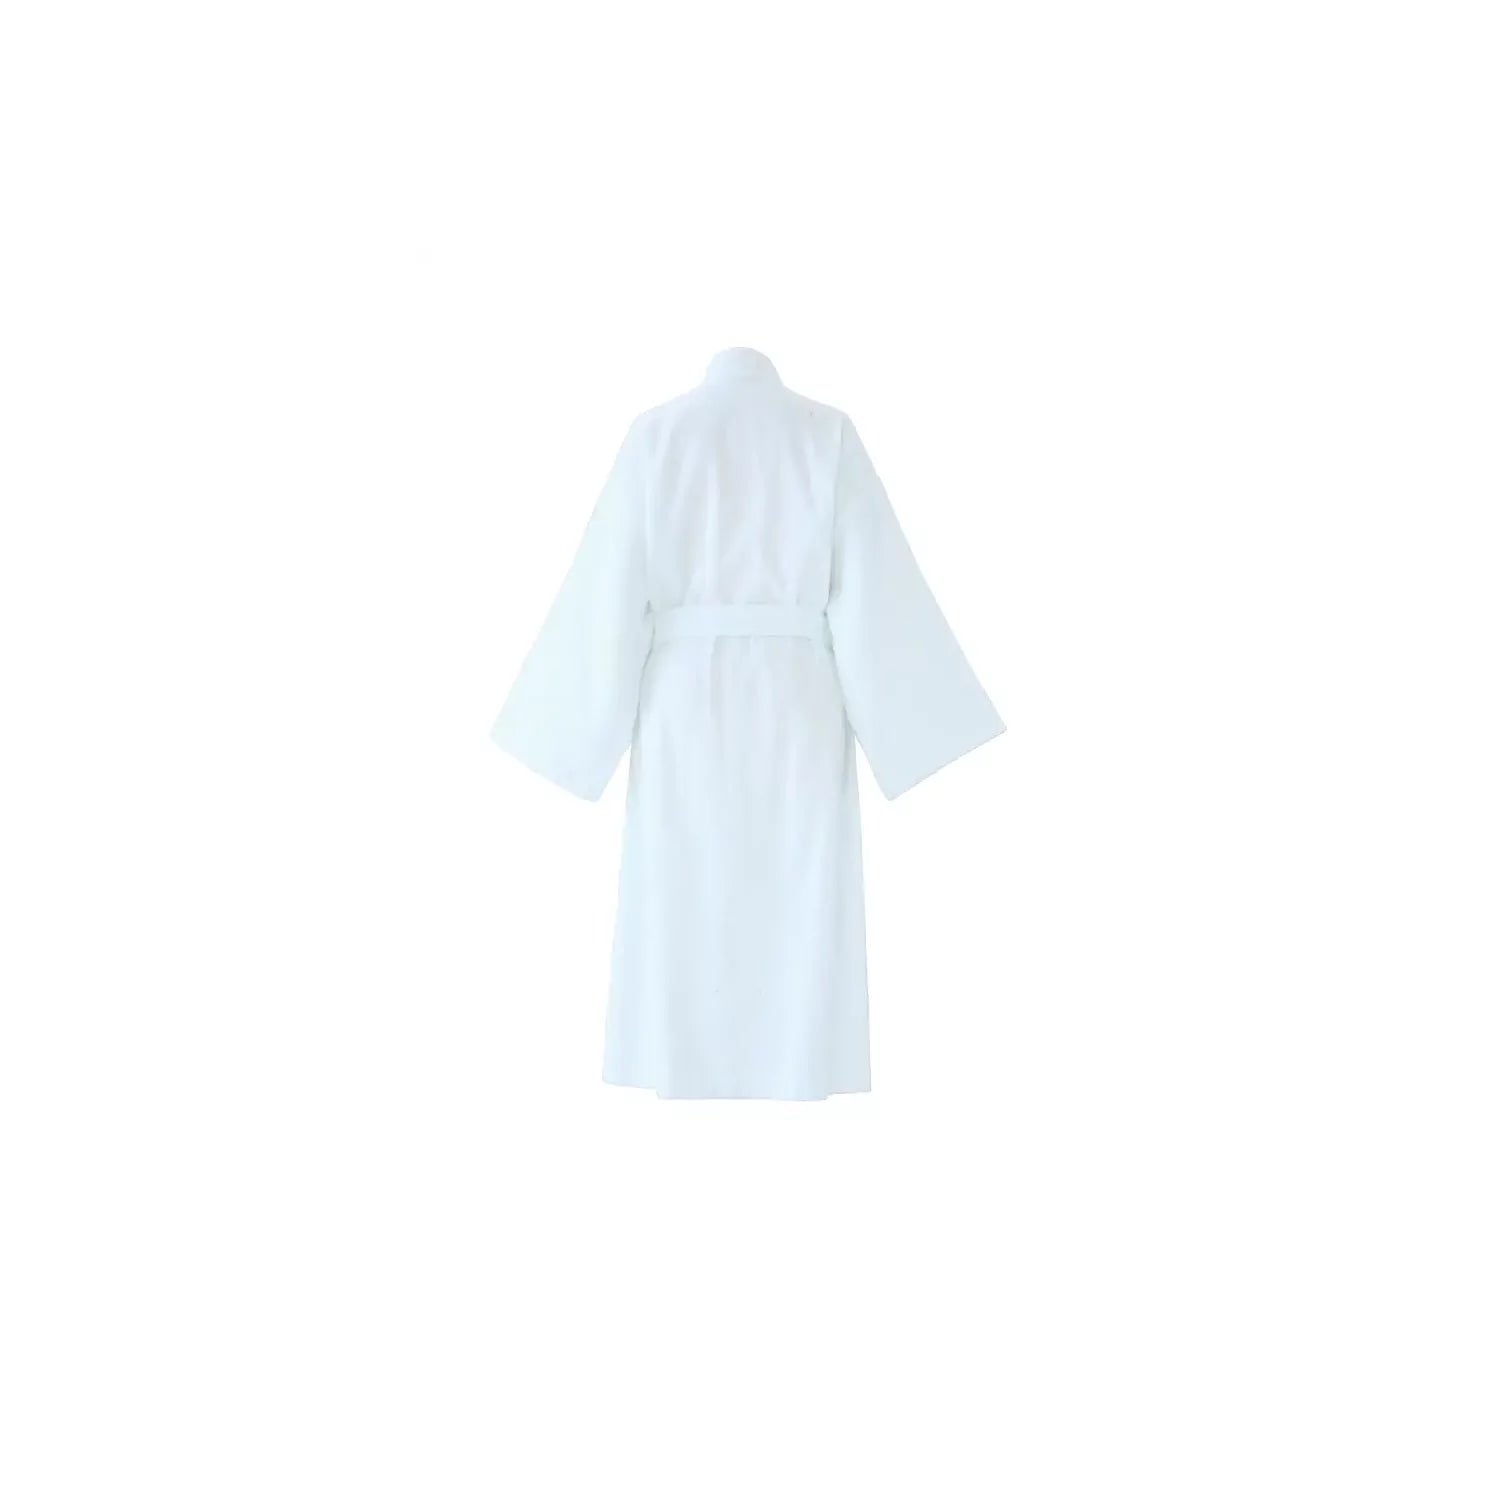 Orim Dumi Shearling Terry Cloth Imabari Cotton Bath Robe 115cm